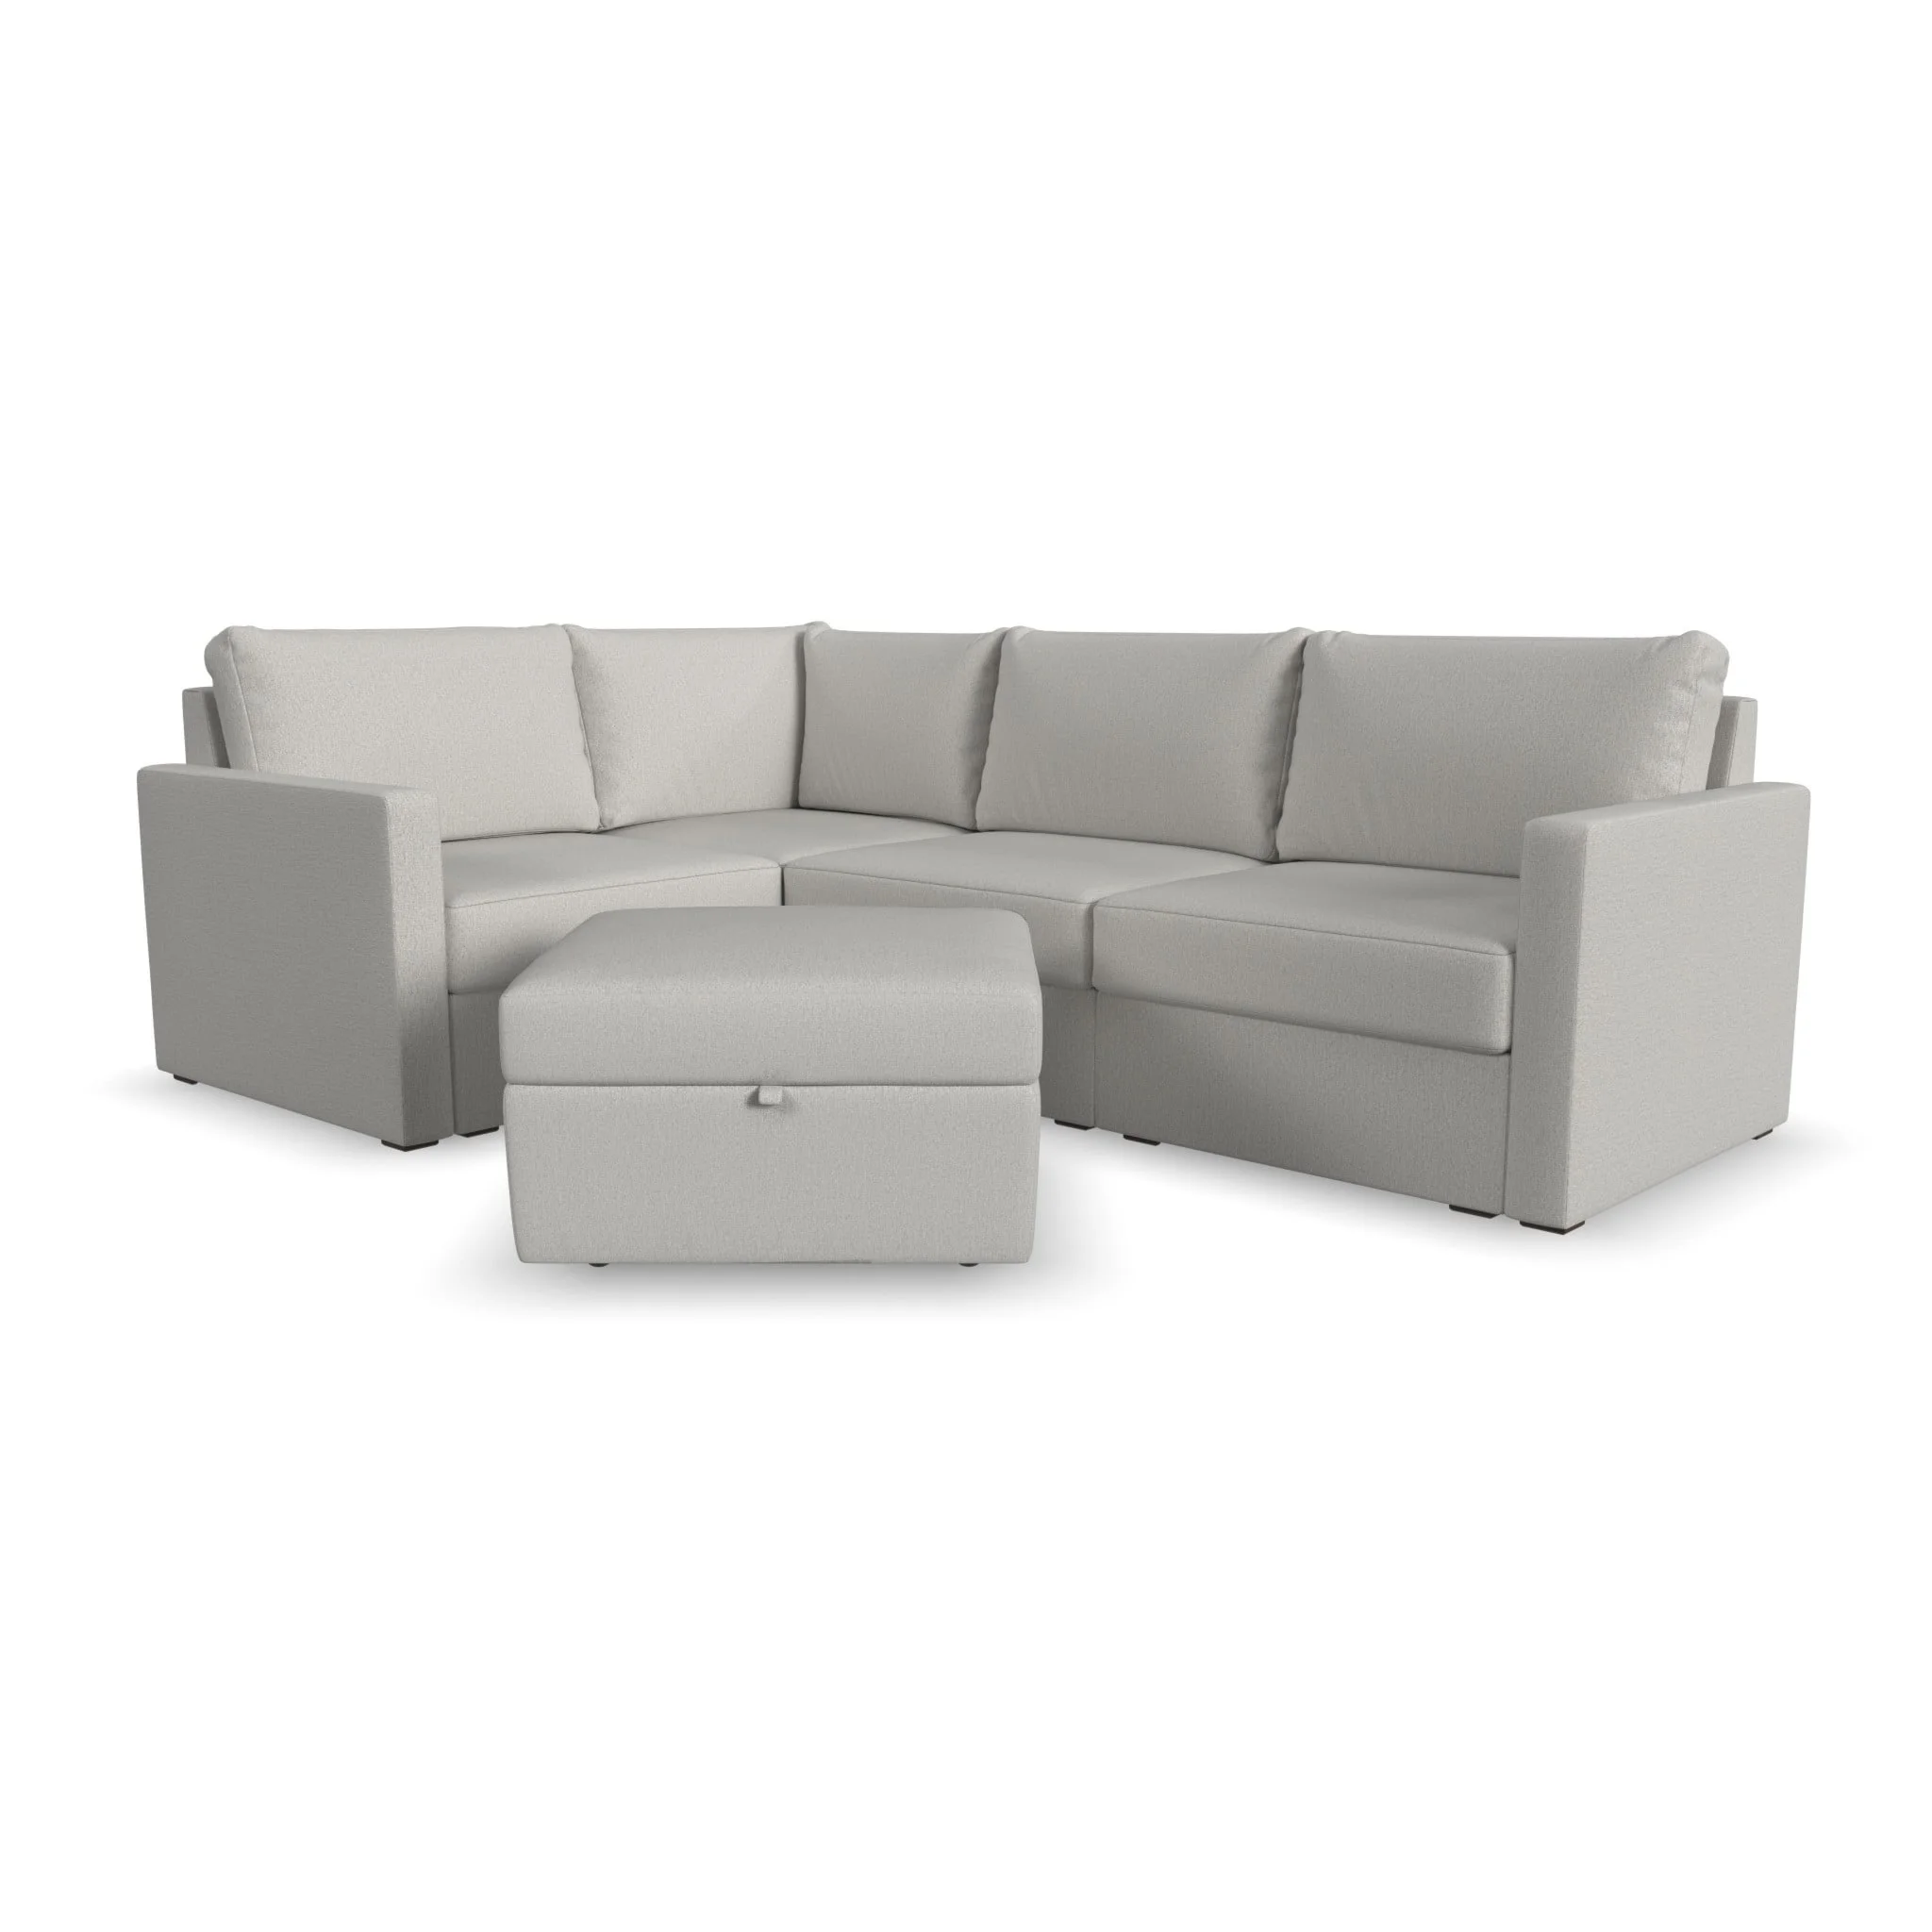 Flexsteel Flex 90224secs31301 Transitional 4 Seat Sectional Sofa With